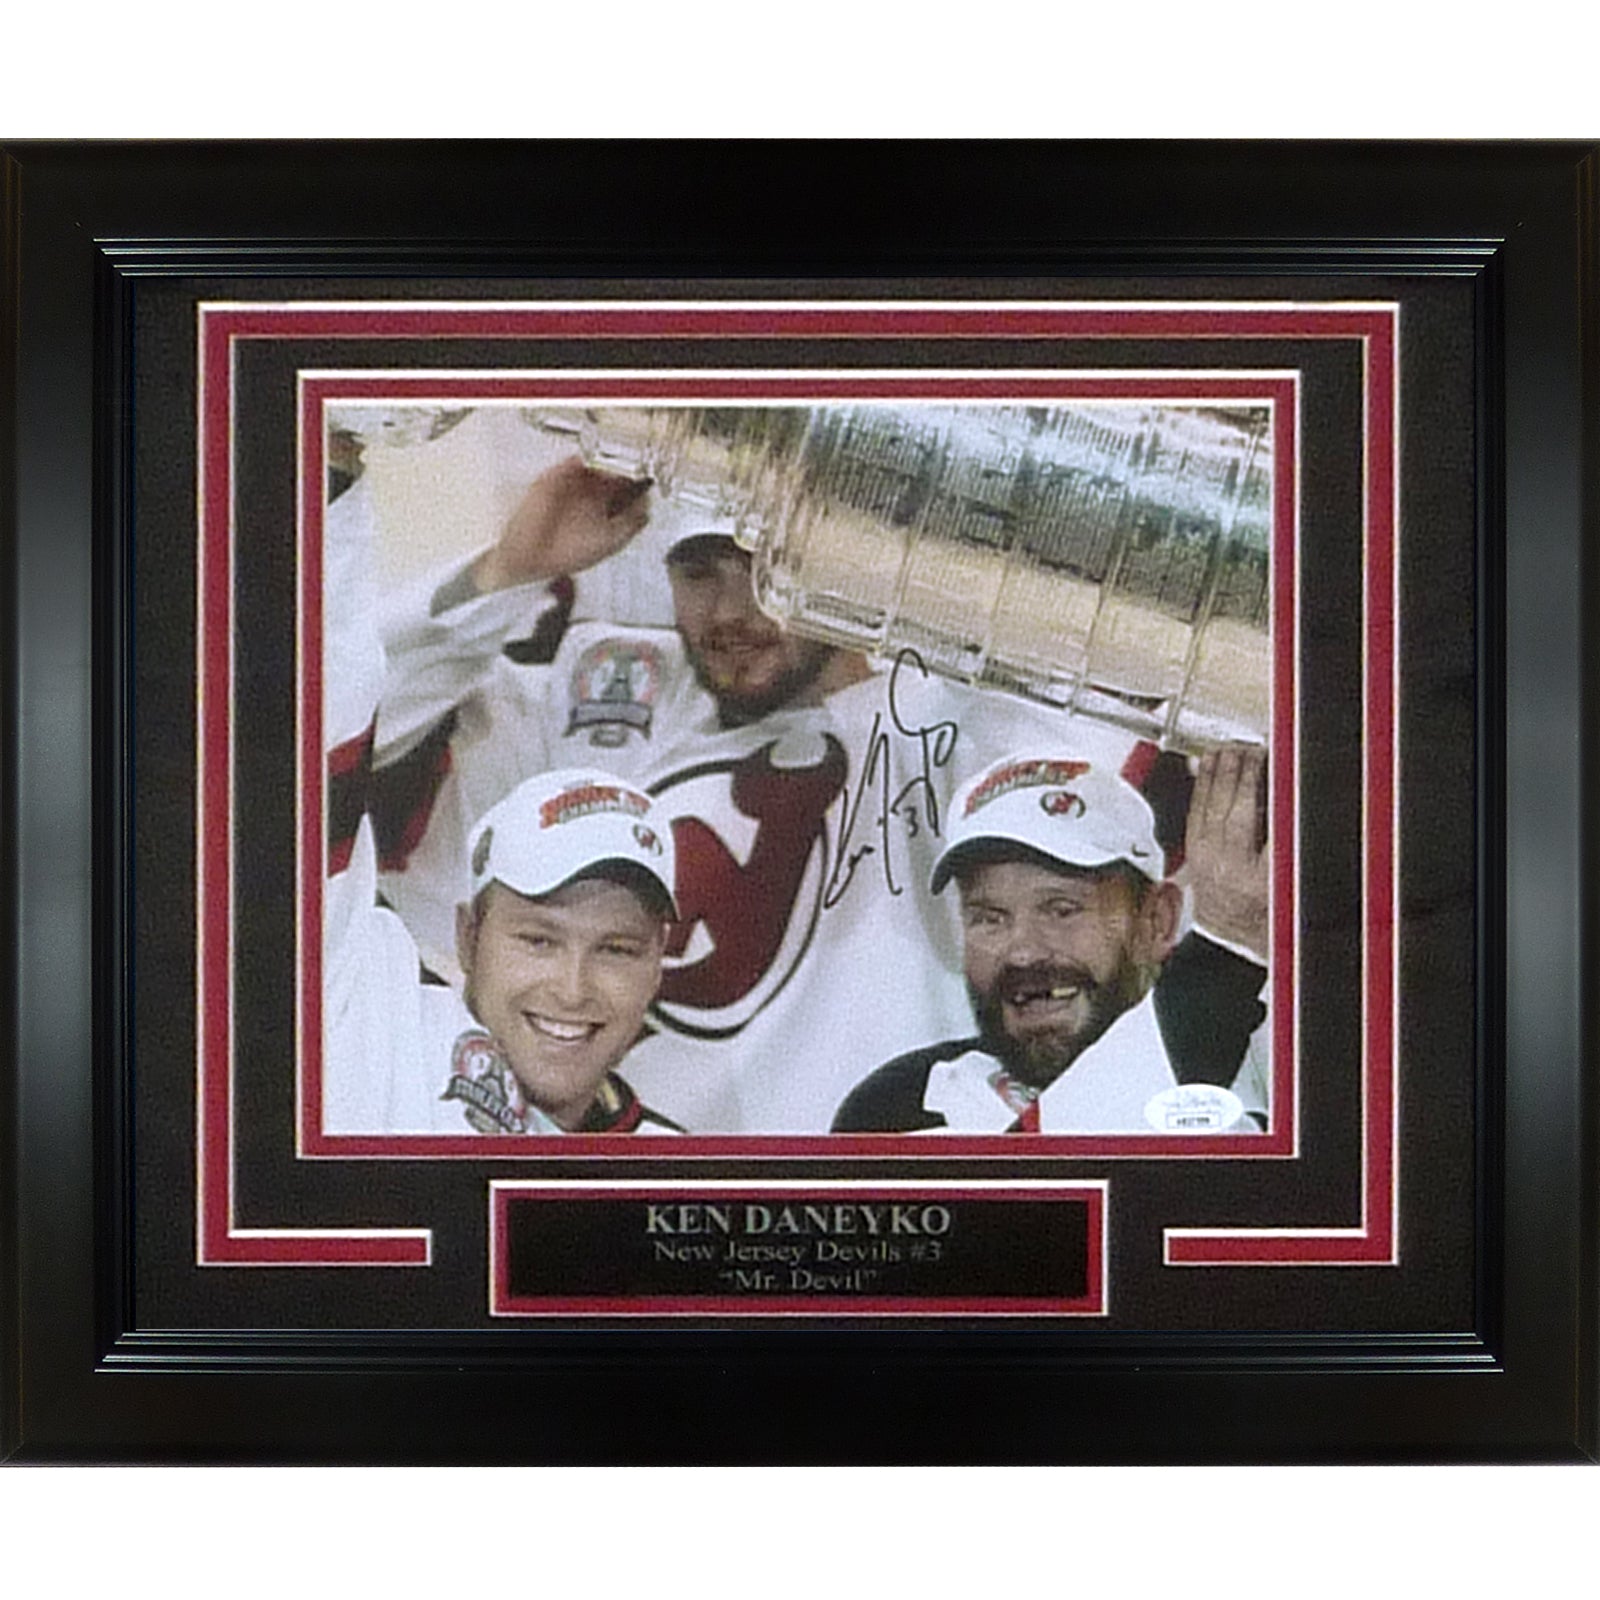 Ken Daneyko Autographed New Jersey Devils Deluxe Framed 8x10 Photo - JSA